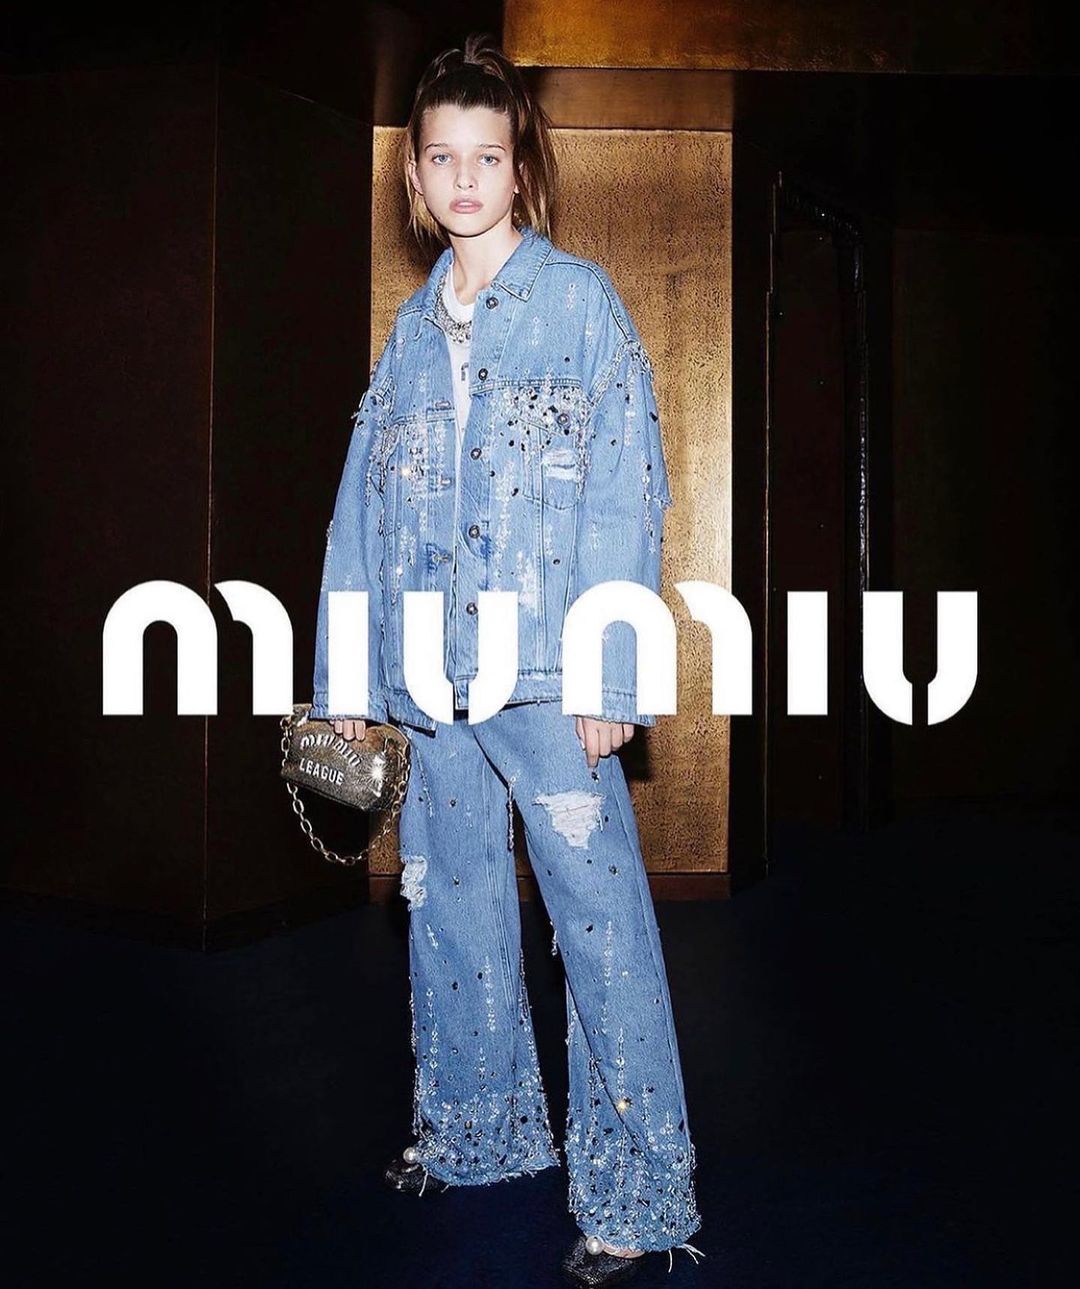 14-річна донька Мілли Йовович стала обличчям бренду Miu Miu